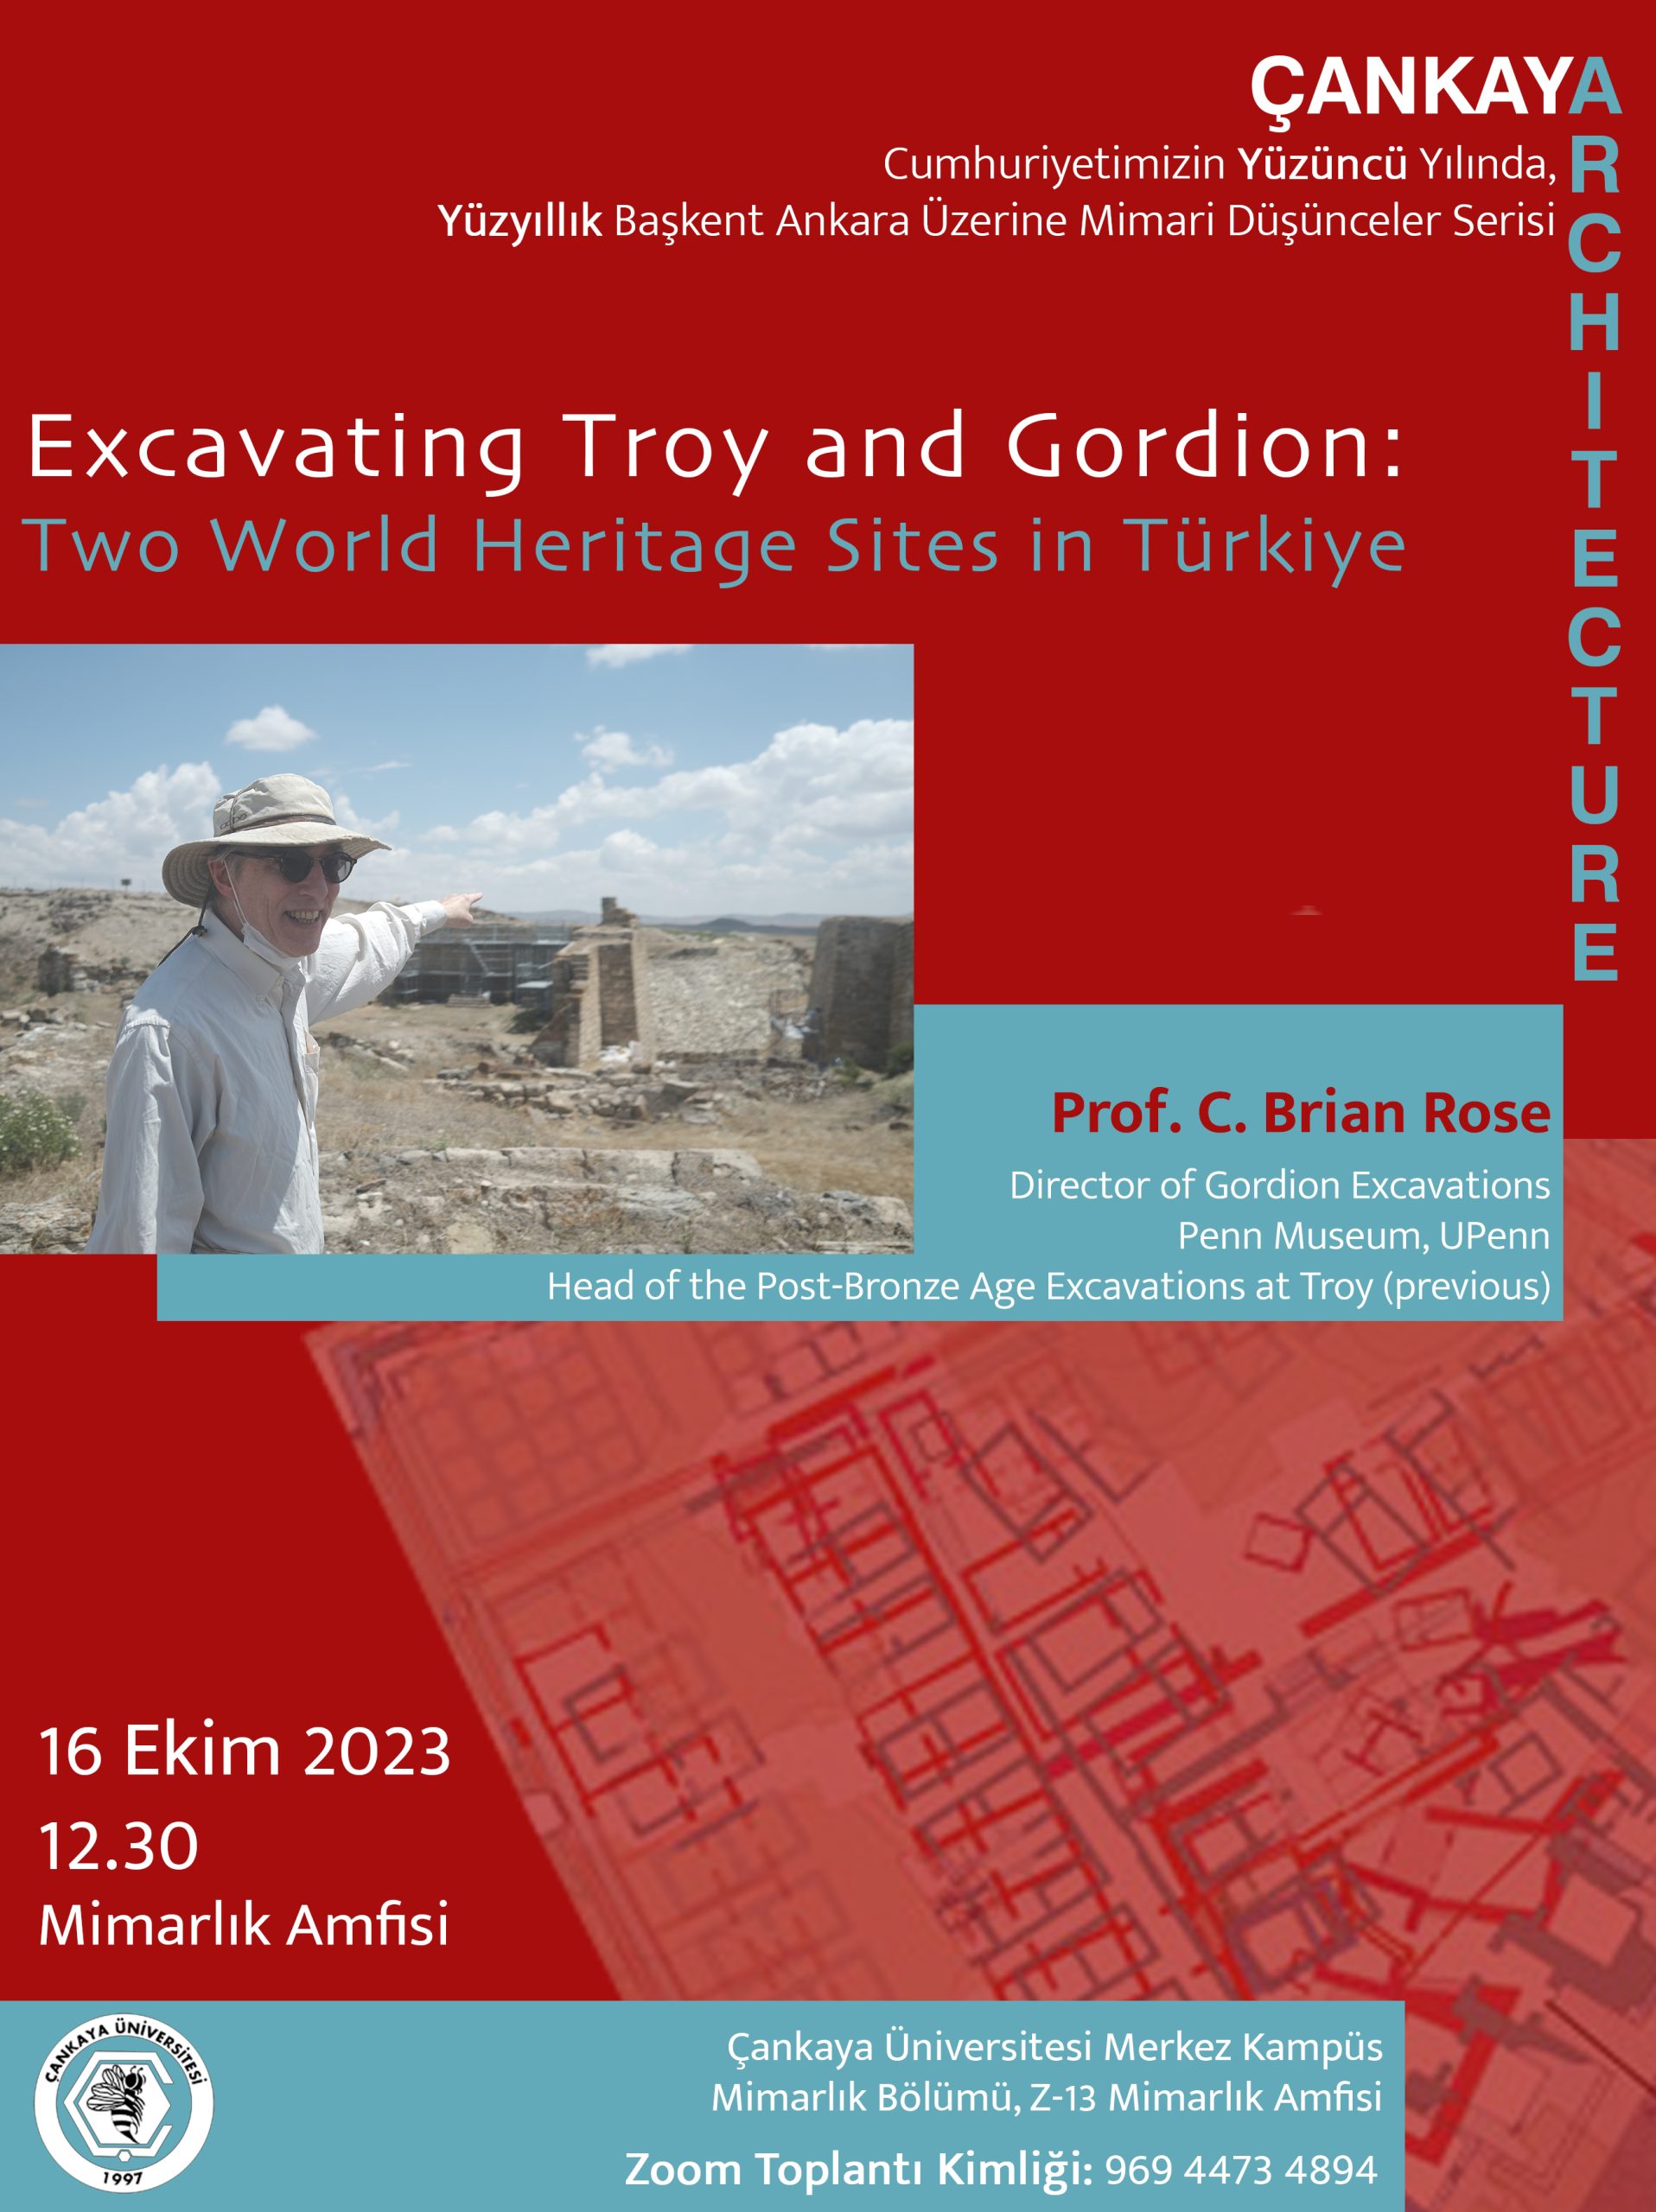 Excavating Troy and Gordion: Two World Heritage Sites in Türkiye – Prof. C. Brian Rose